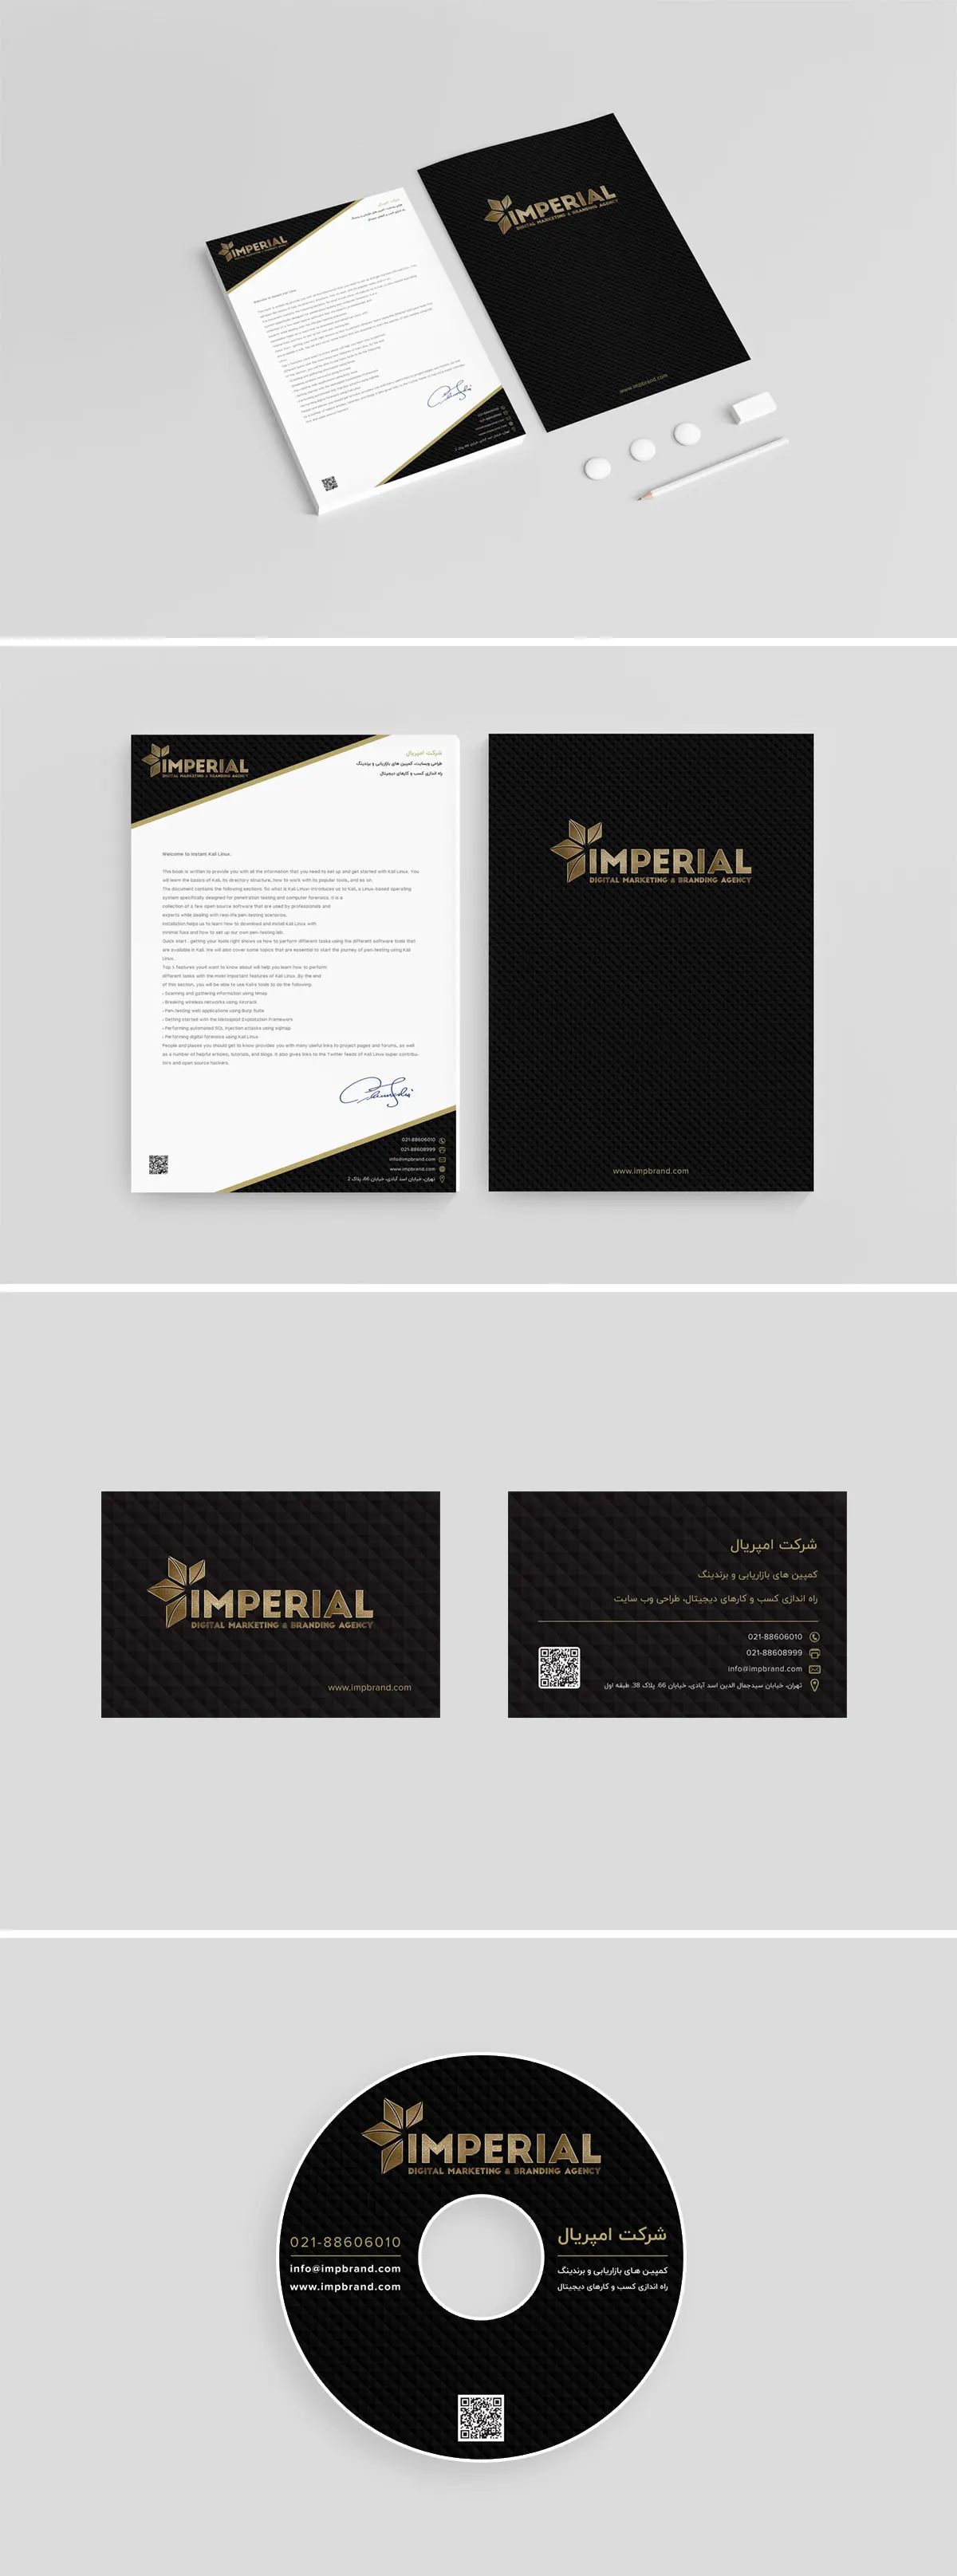 Imperial Brand office set design  | Hossein Donyadideh